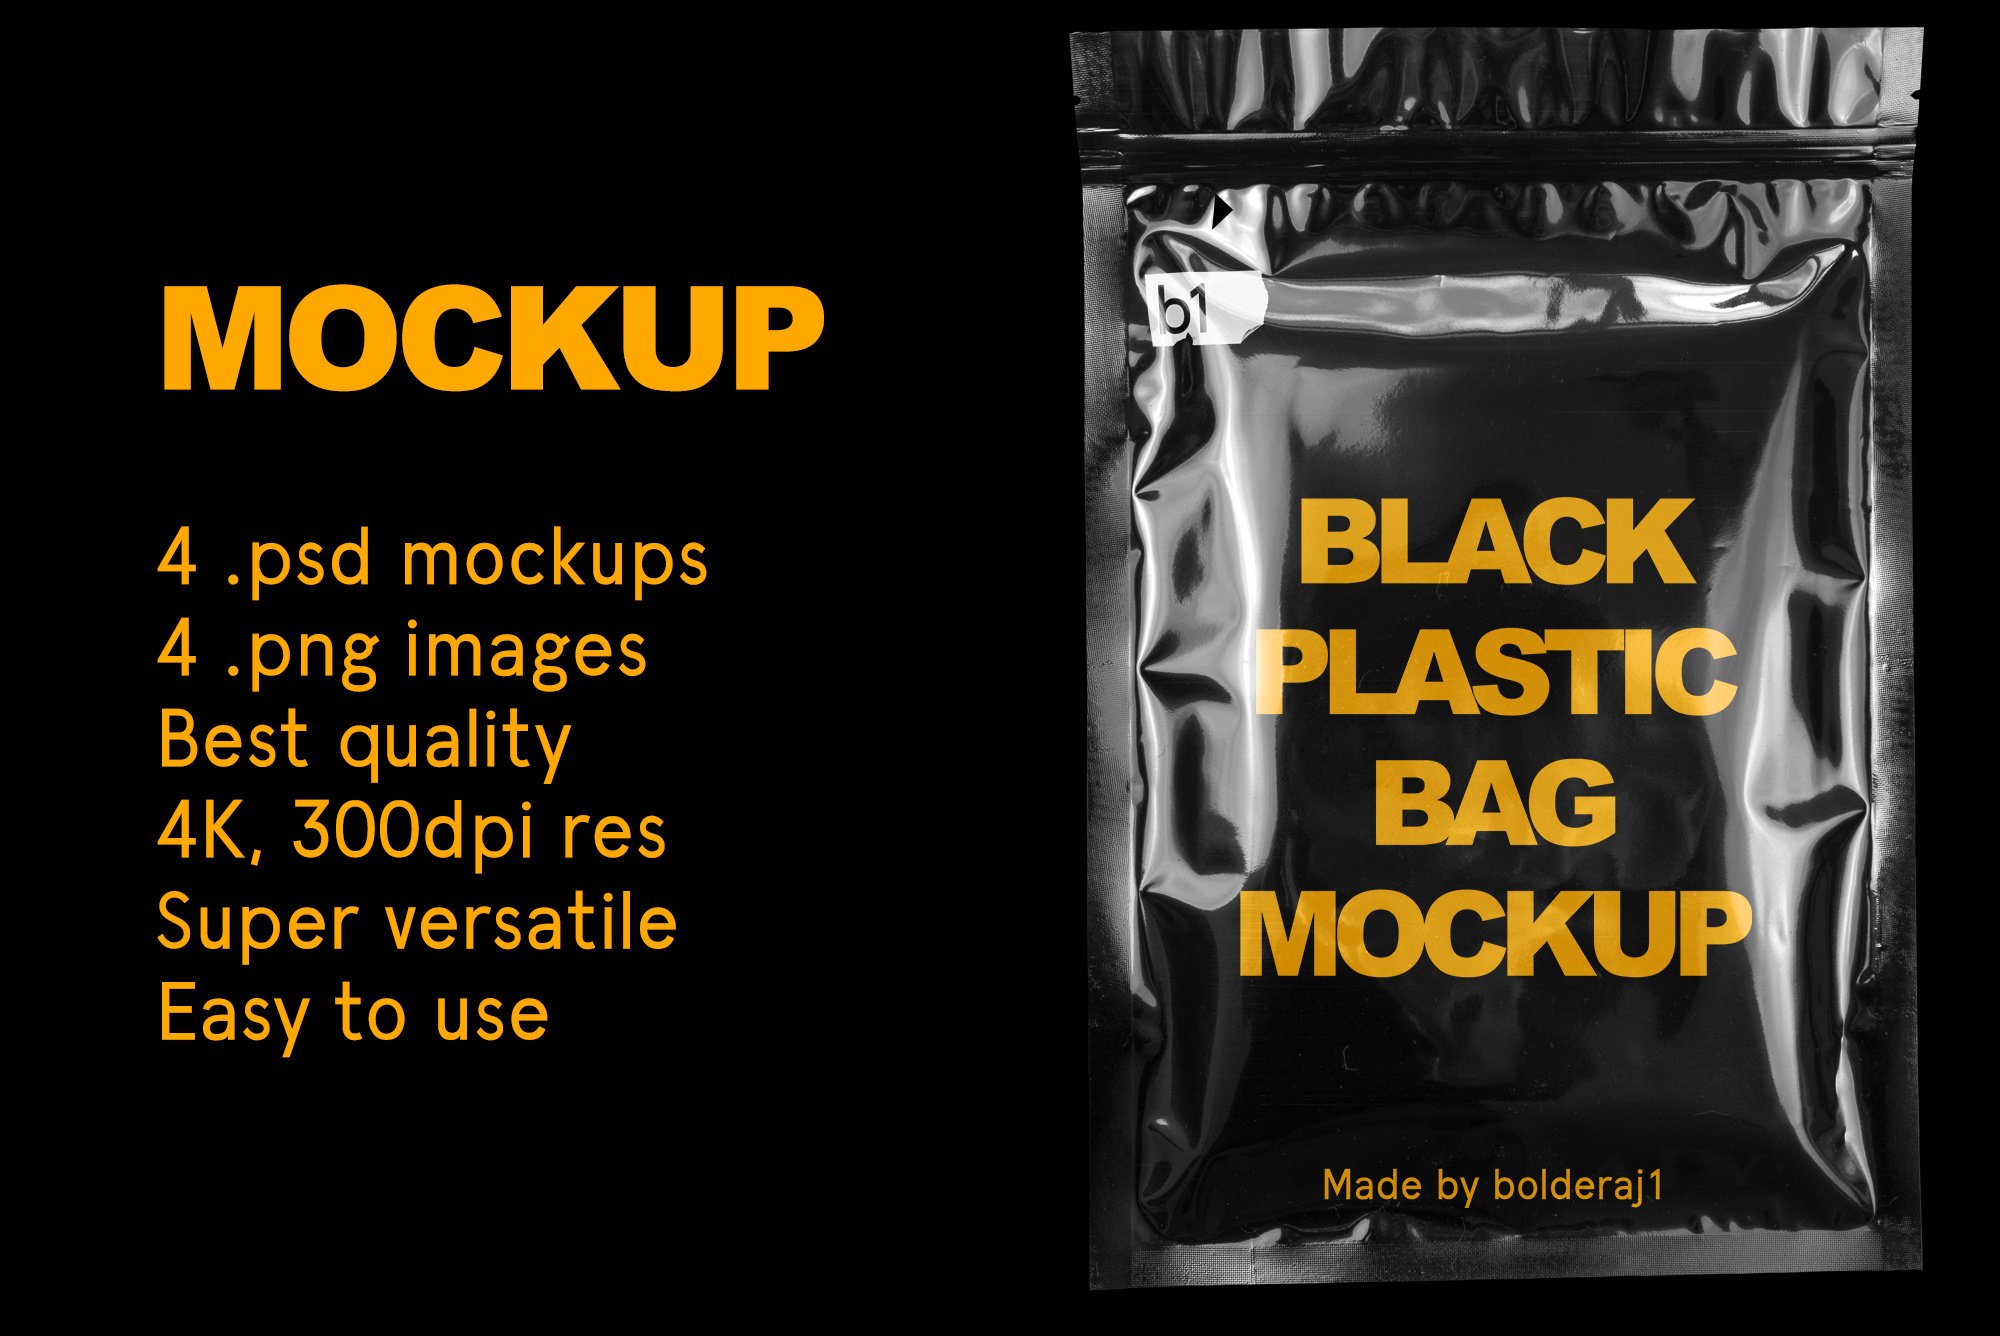 black plastic bag mockup bolderaja11 799